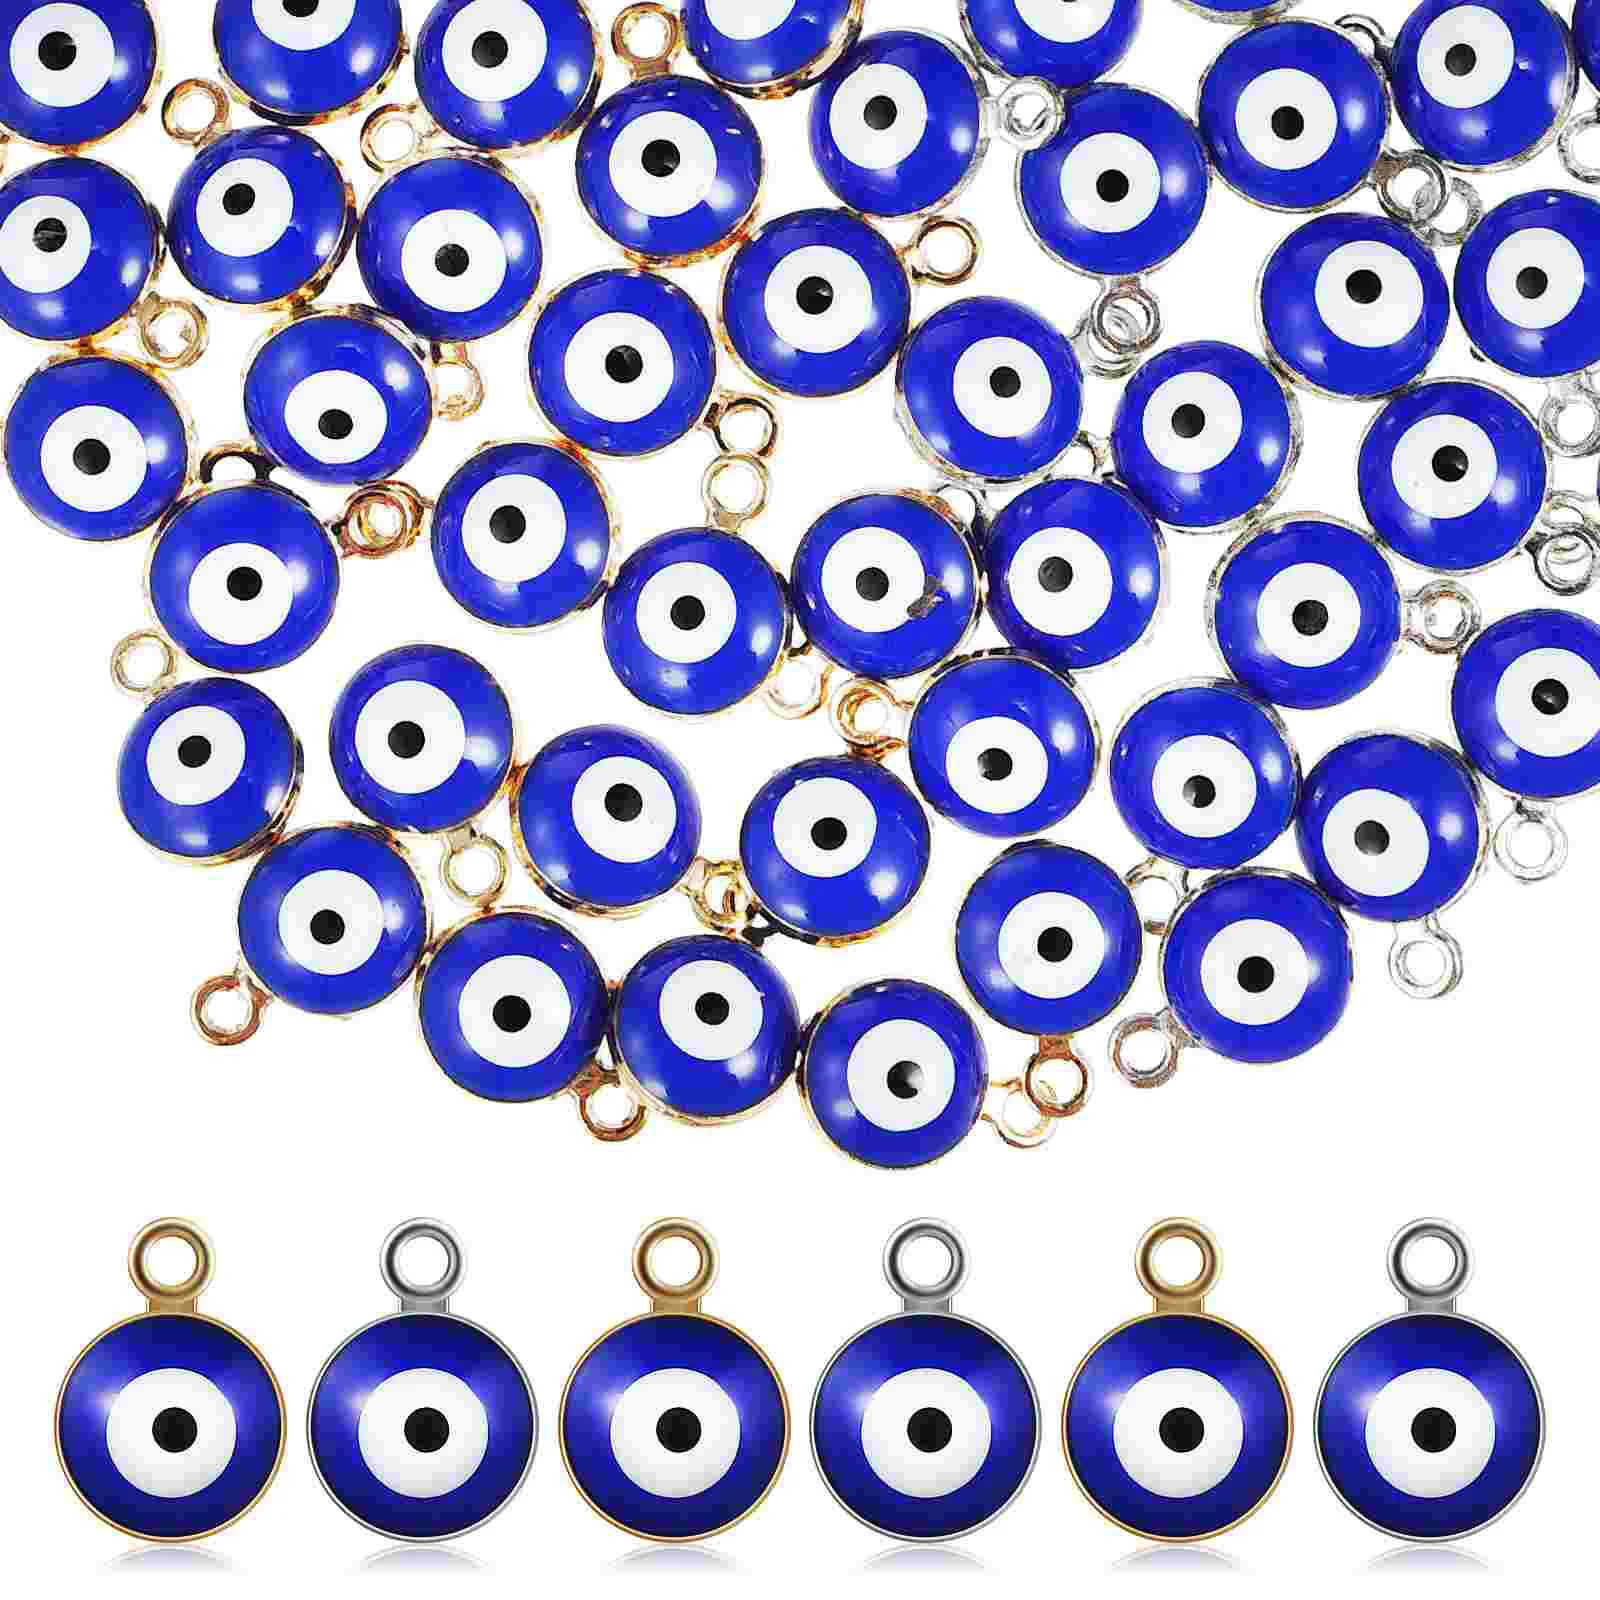 

60 Pcs Eye Pendant Eyeball Charms Glass Ornaments Beads Necklace Pendants Jewelry Making Kit Resin Crystal Jewellery